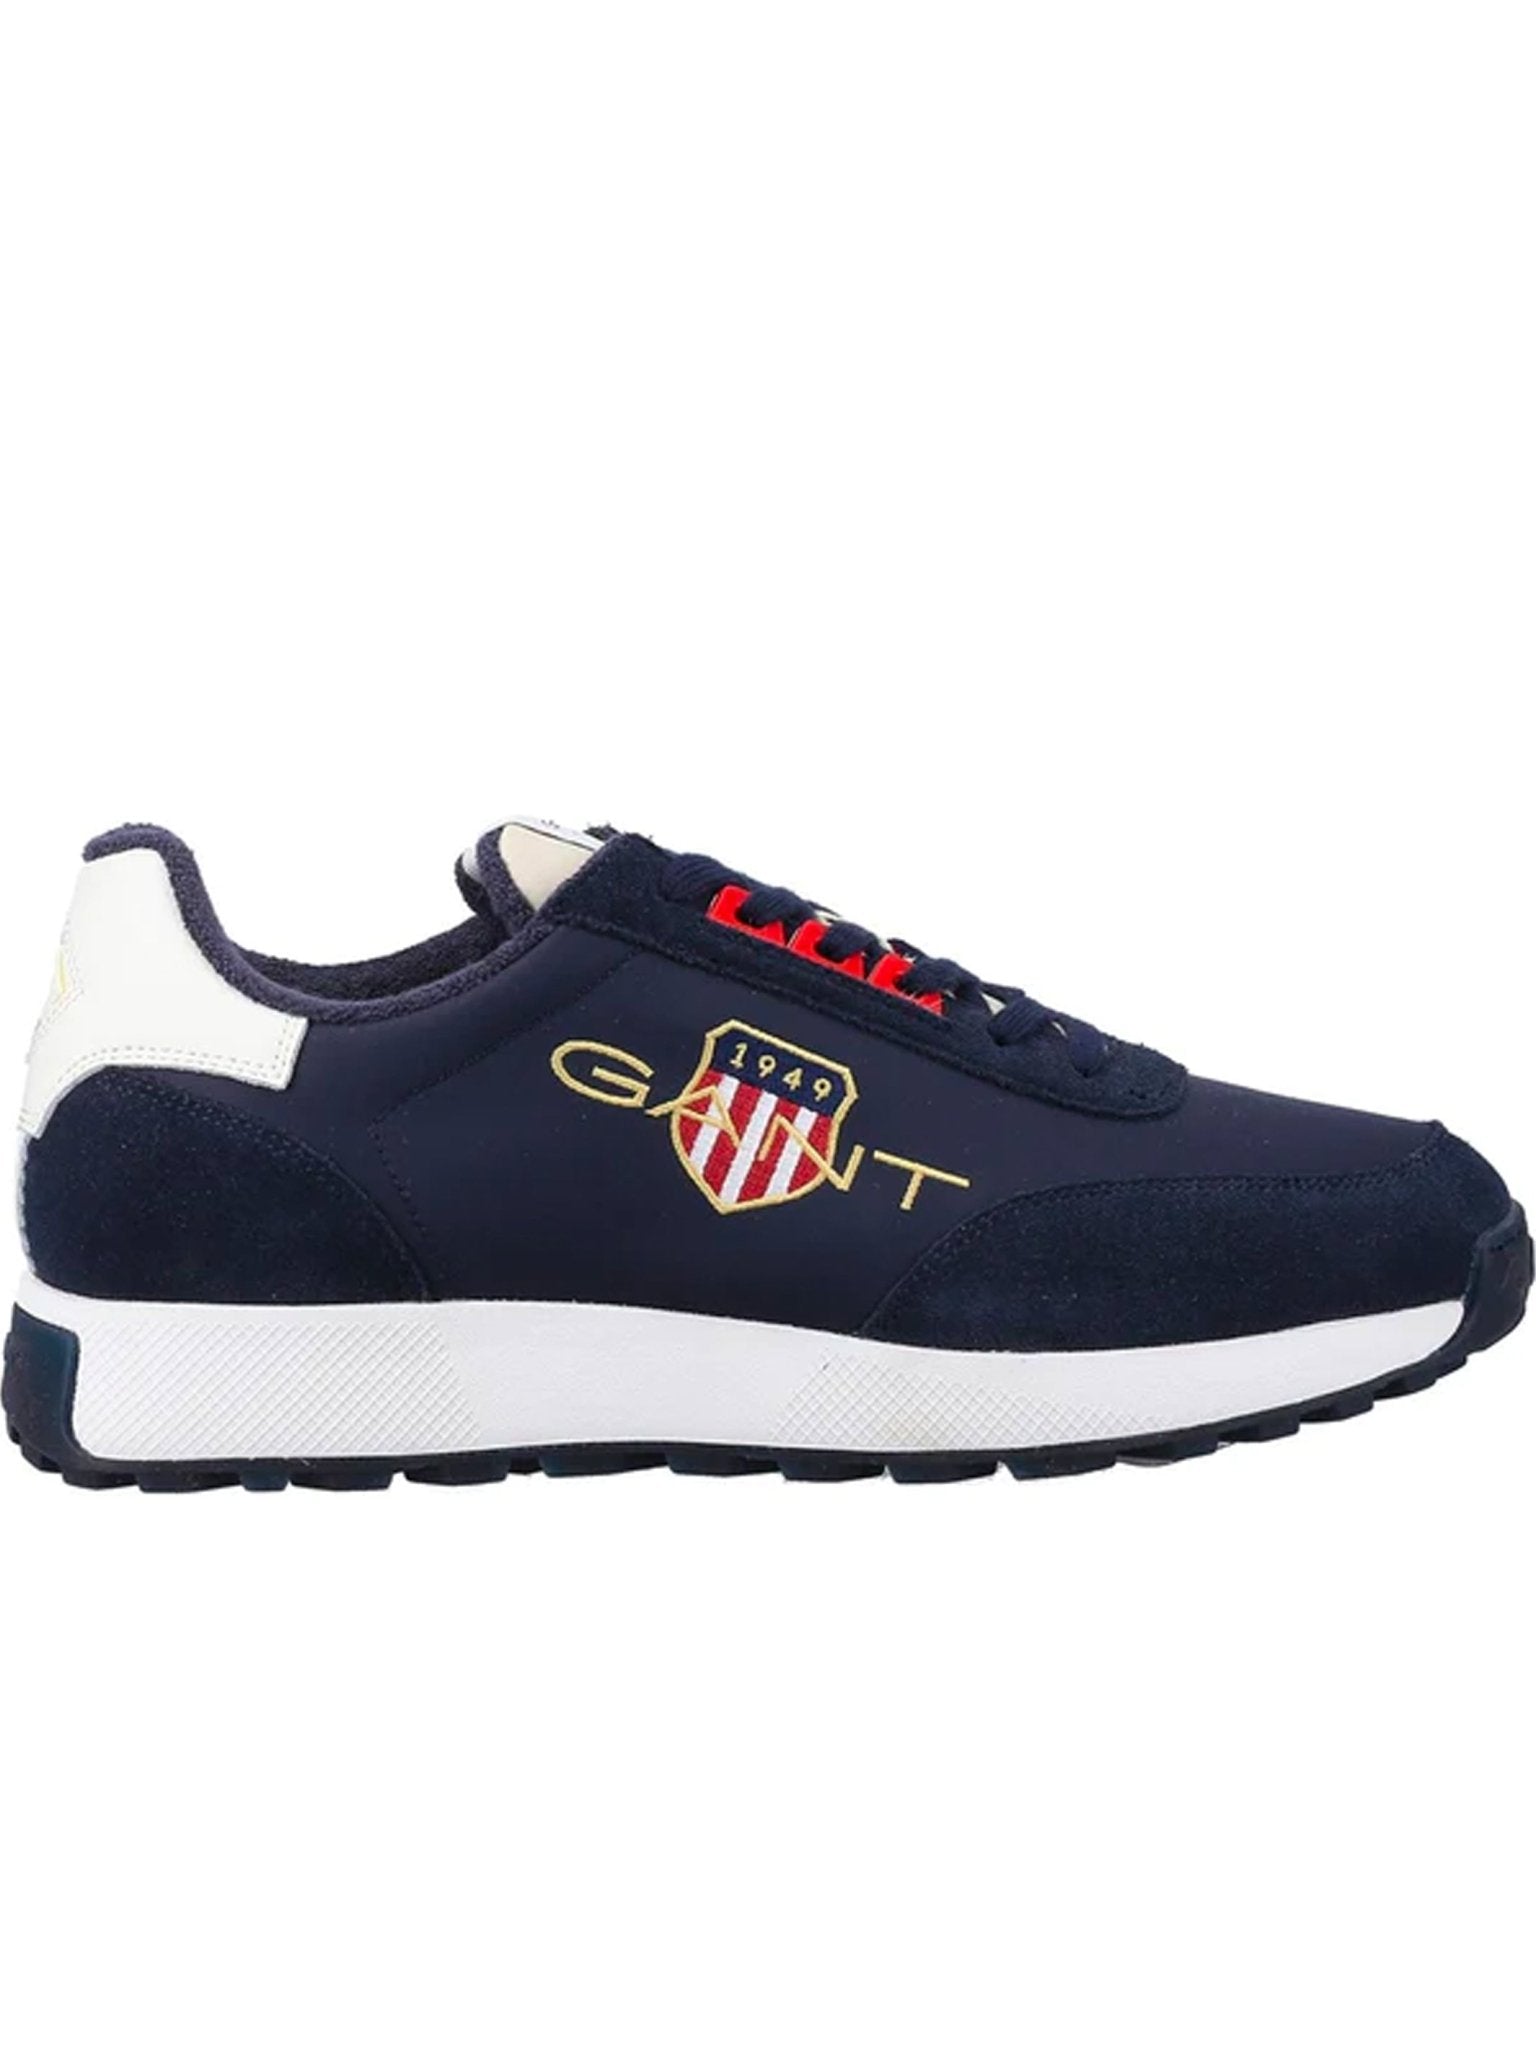 4elementsclothingGANTGANT - Garold Mens trainer / Gant sneaker - Gant Shield LogoShoes4056734701061